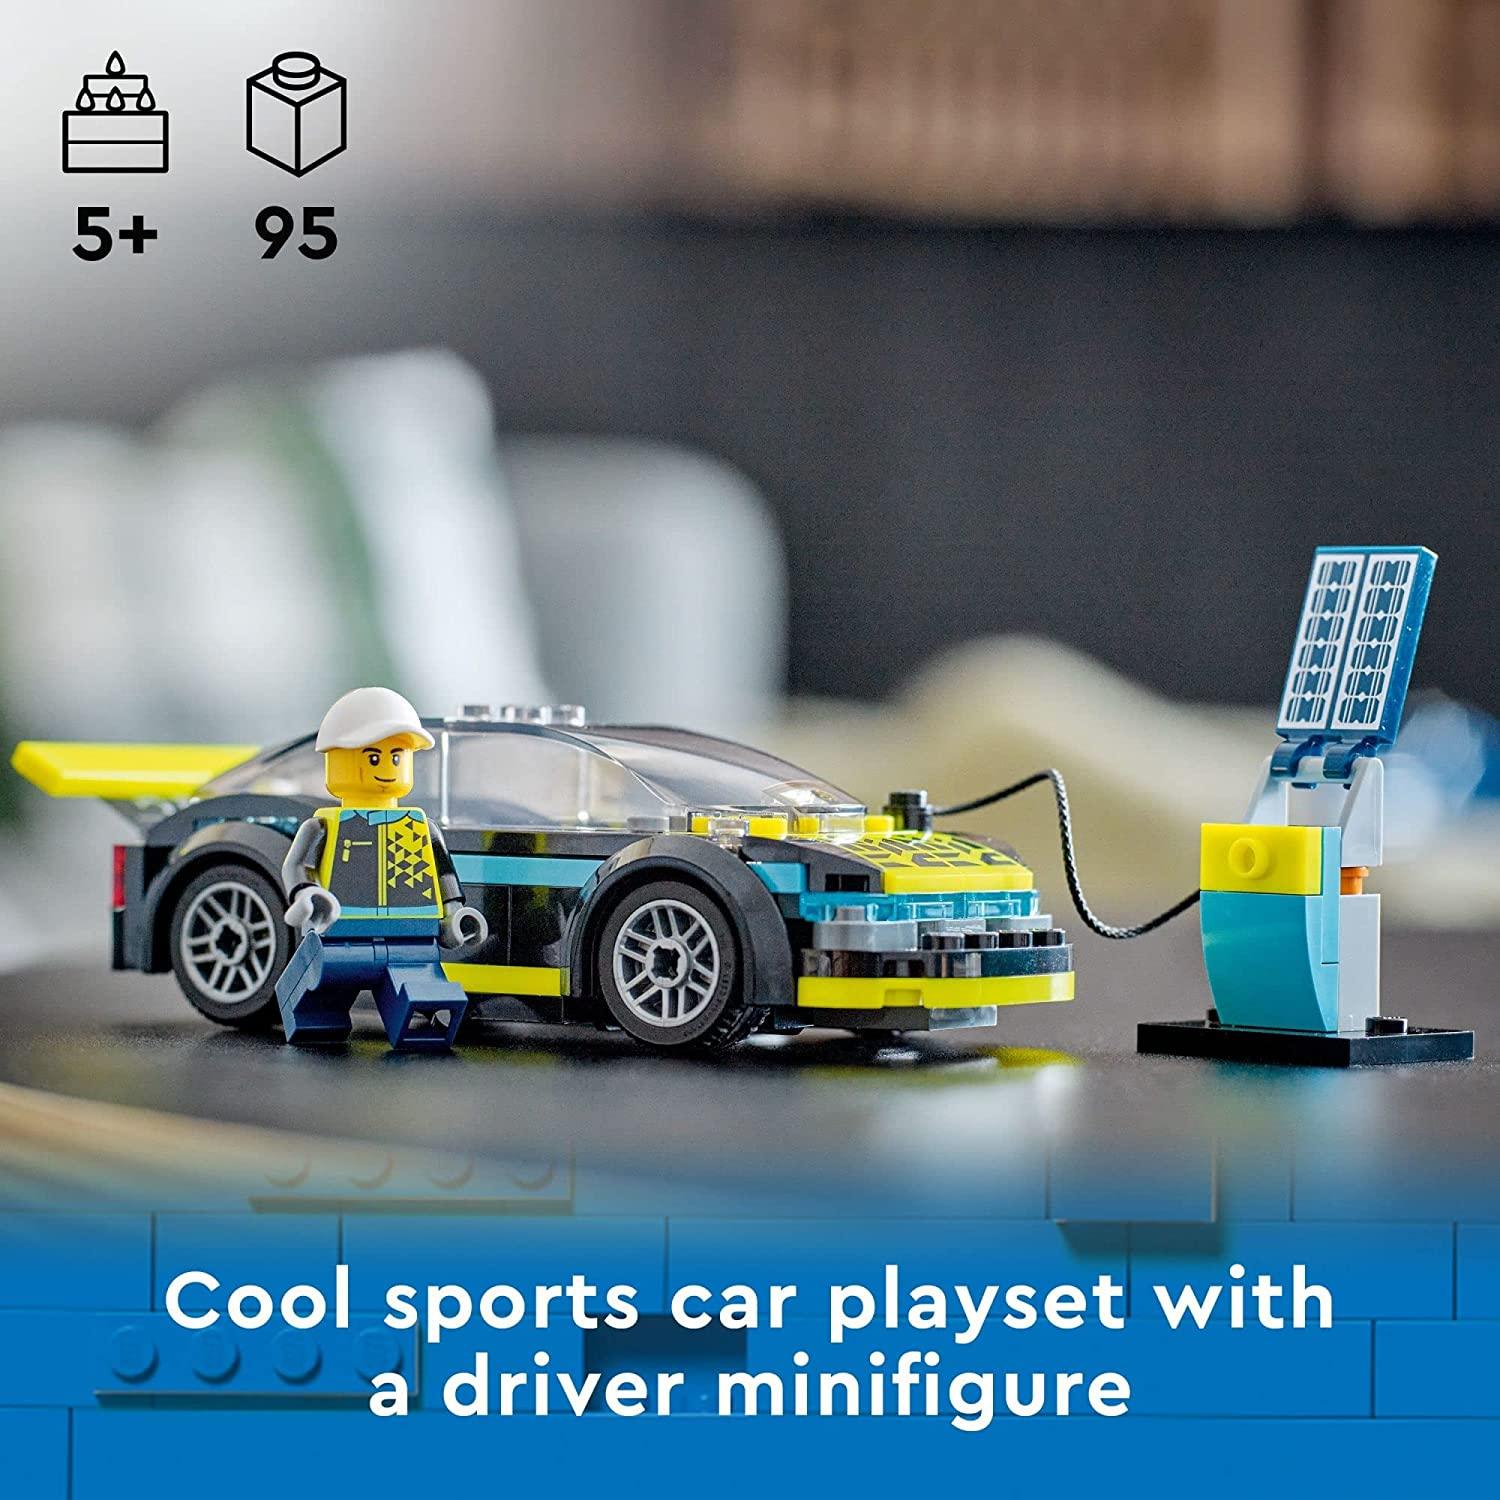 LEGO 60383 City Electric Sports Car (95 pieces) - BumbleToys - 4+ Years, 5-7 Years, 6+ Years, Boys, Cars, City, EXO, LEGO, Pre-Order